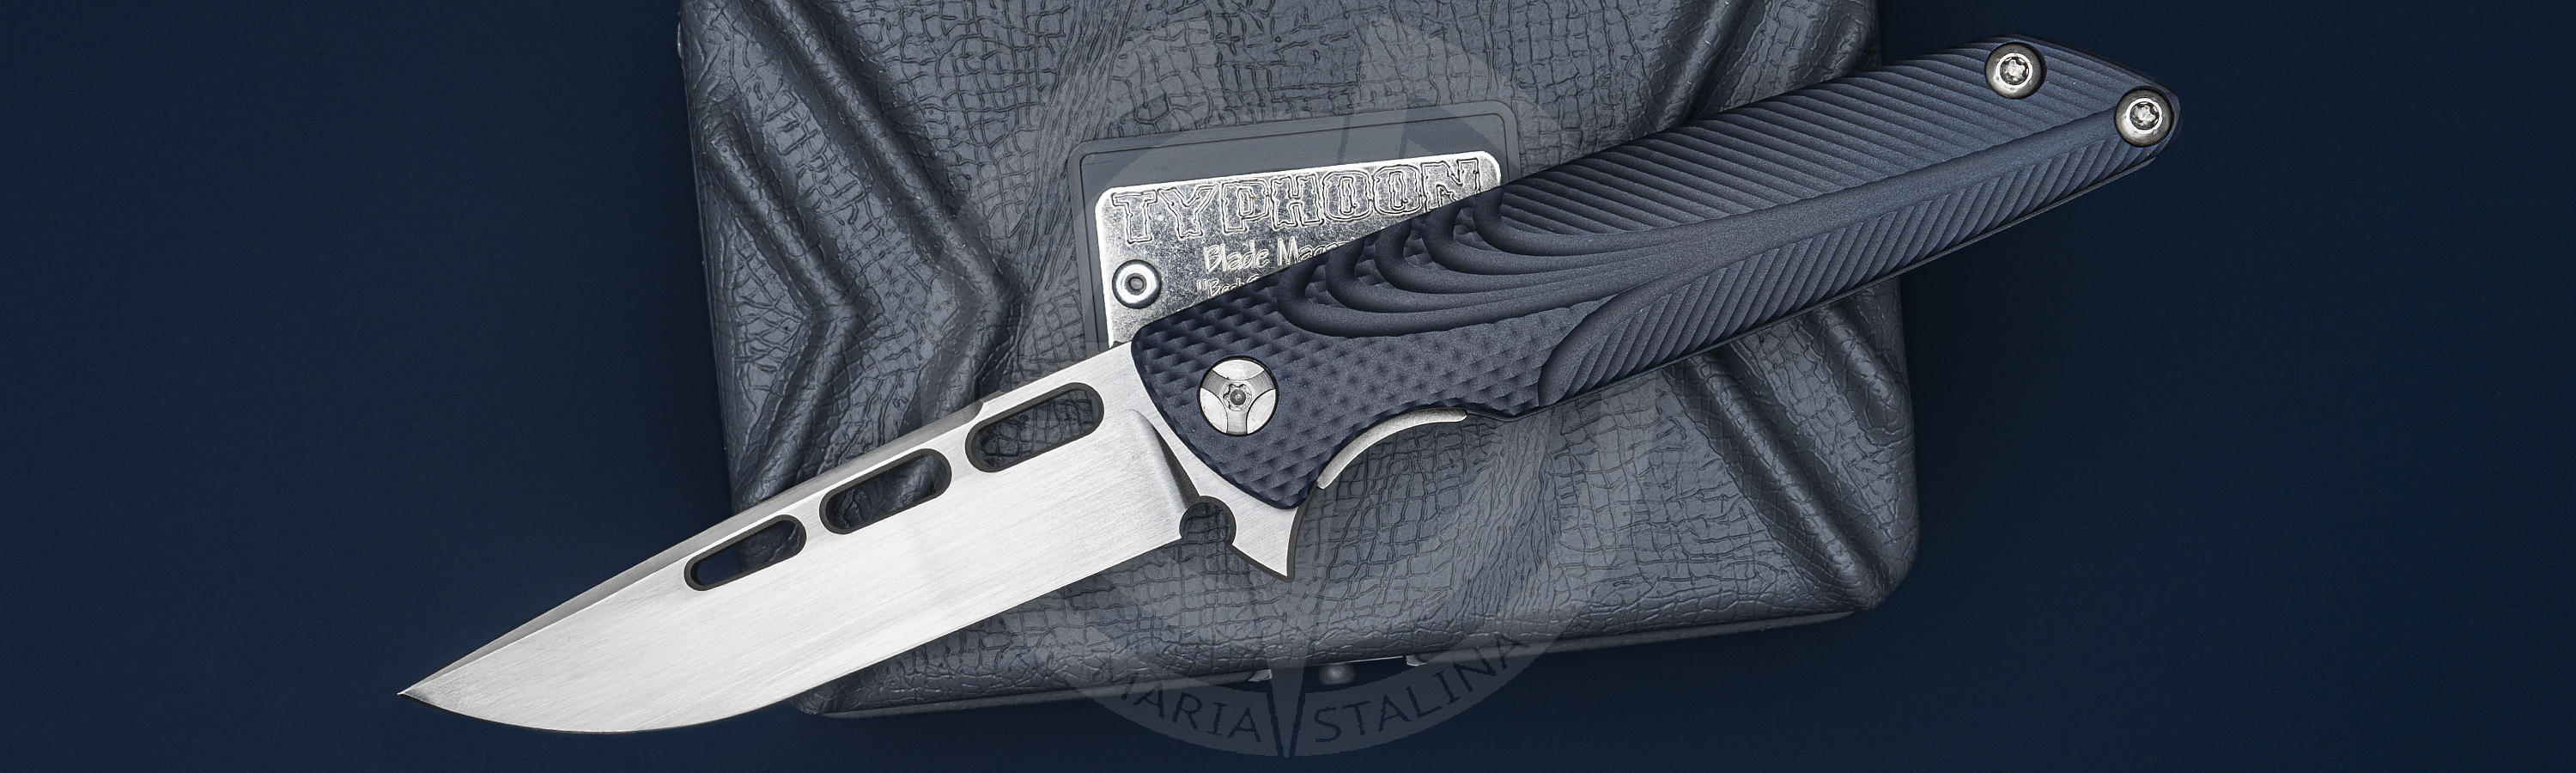 American folding knife